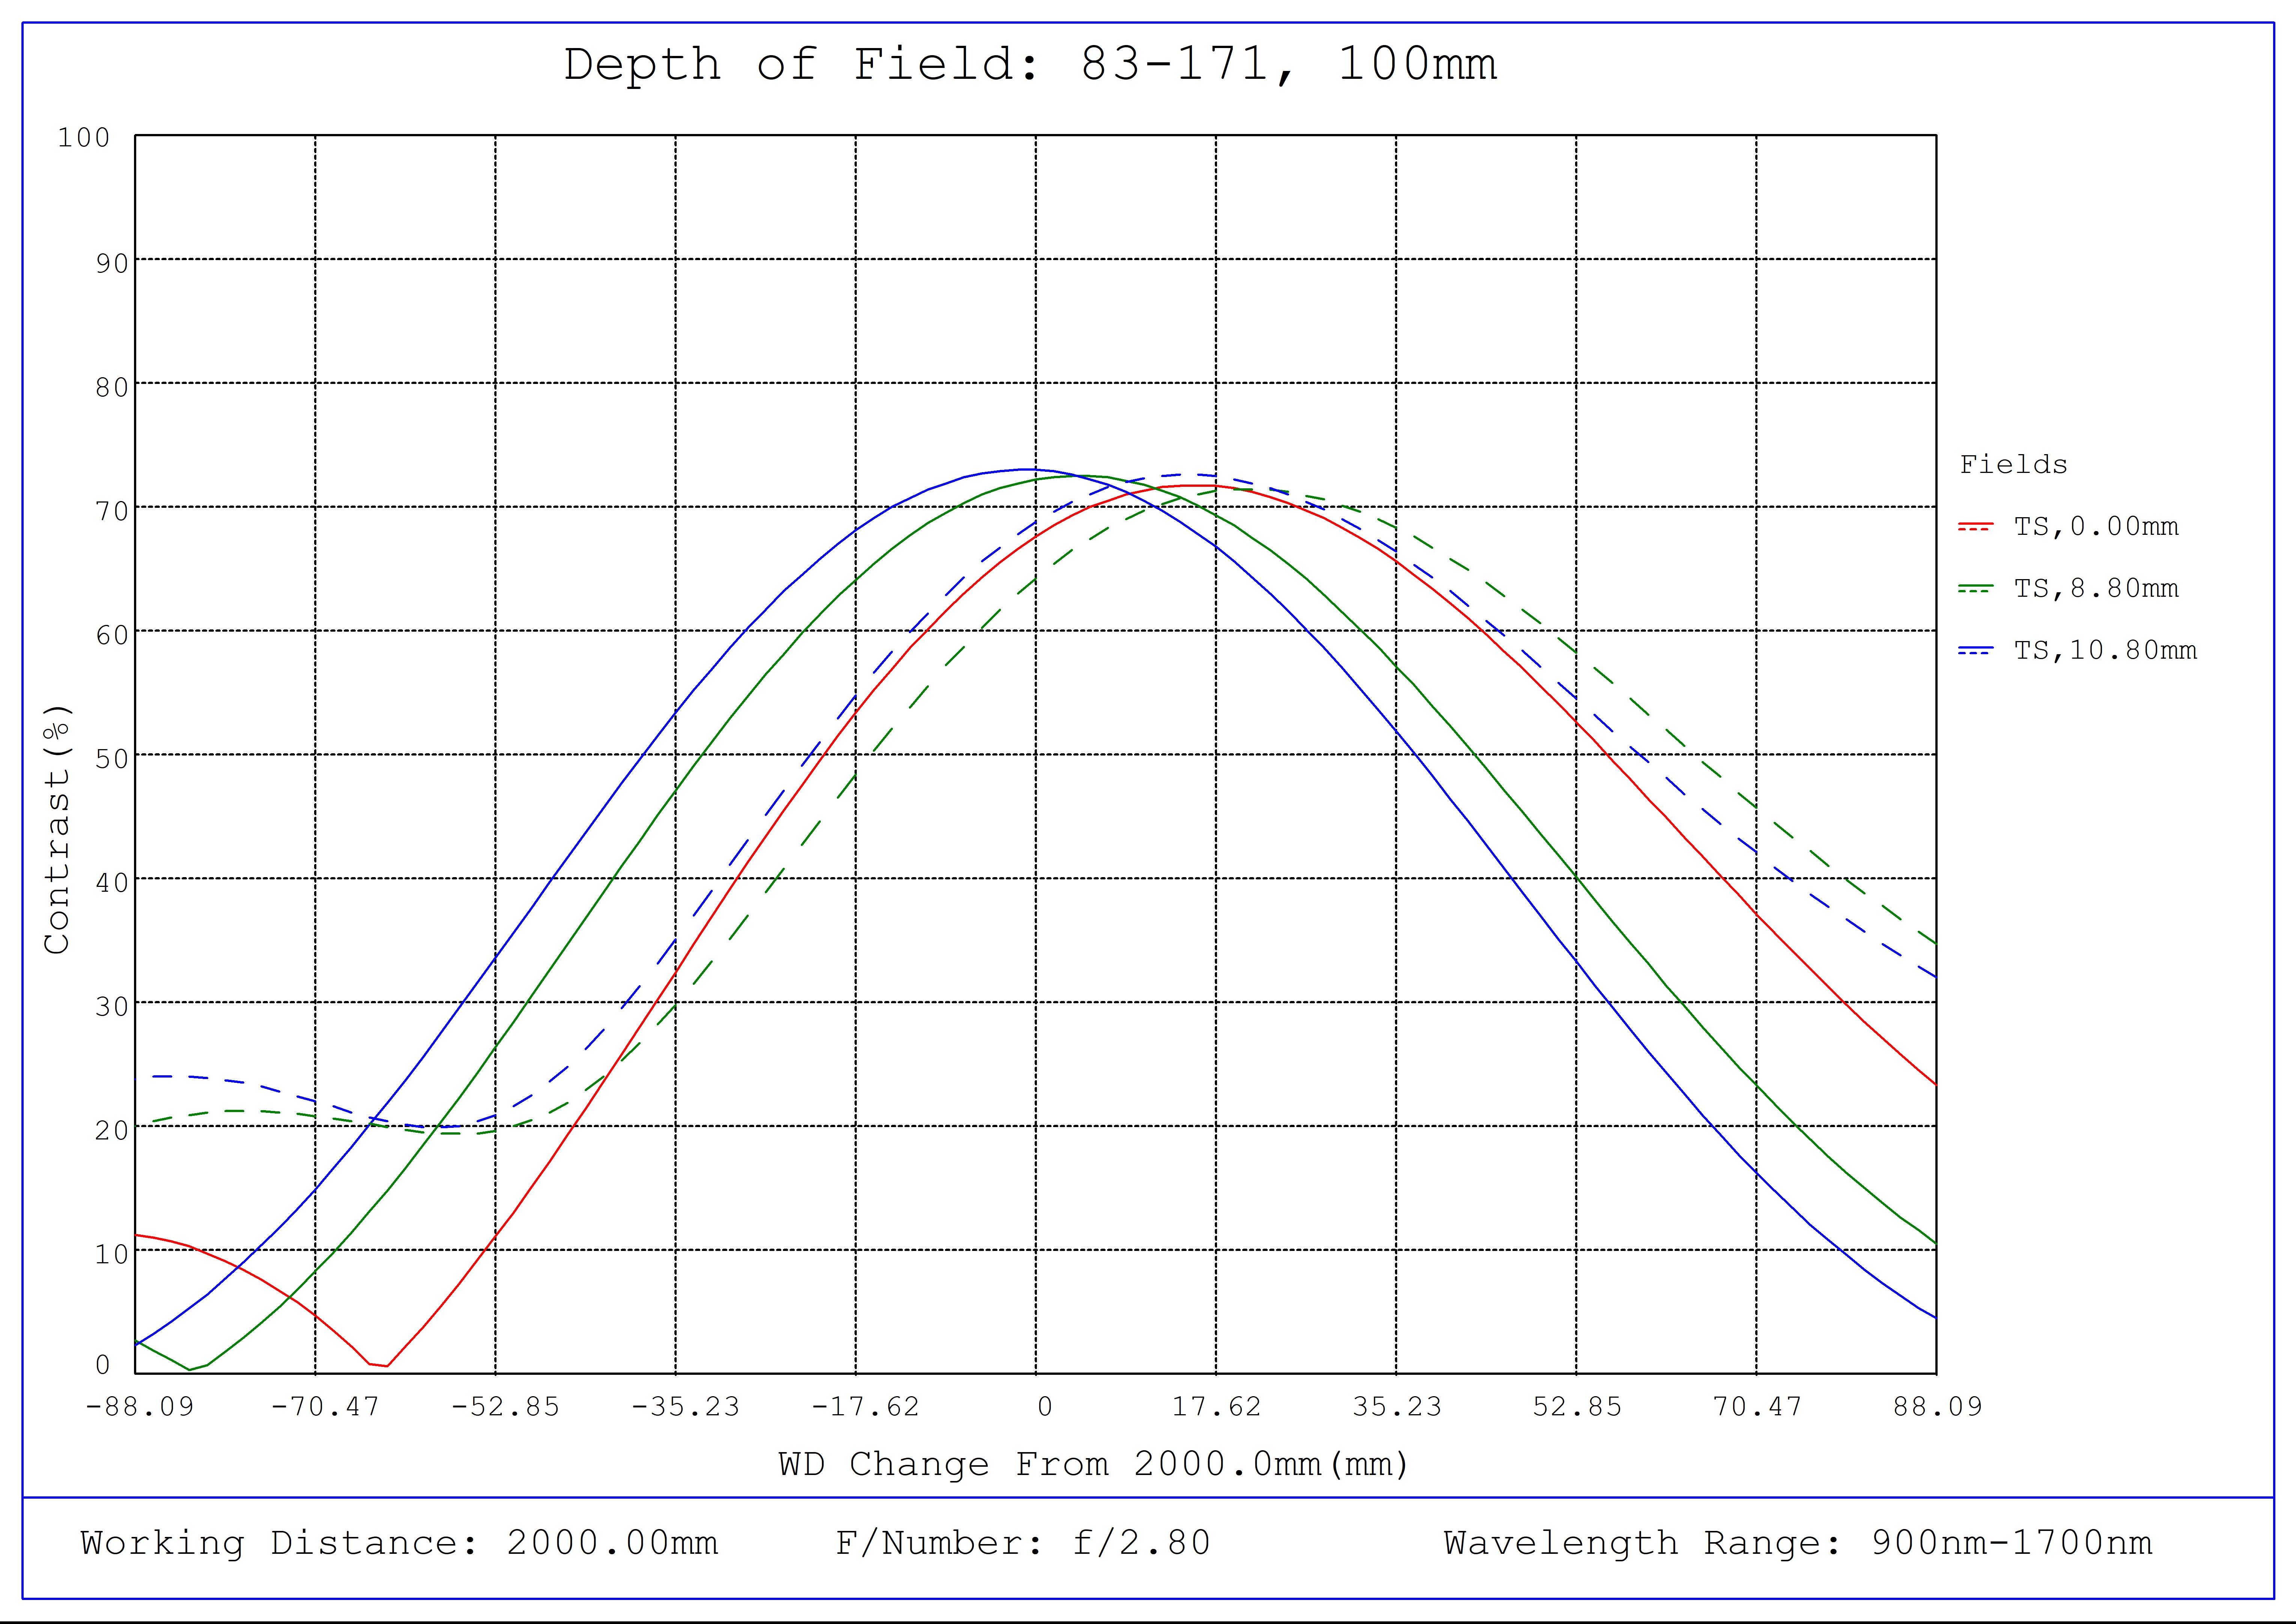 #83-171, 100mm SWIR Series Fixed Focal Length Lens, F-Mount, Depth of Field Plot, 2000mm Working Distance, f2.8